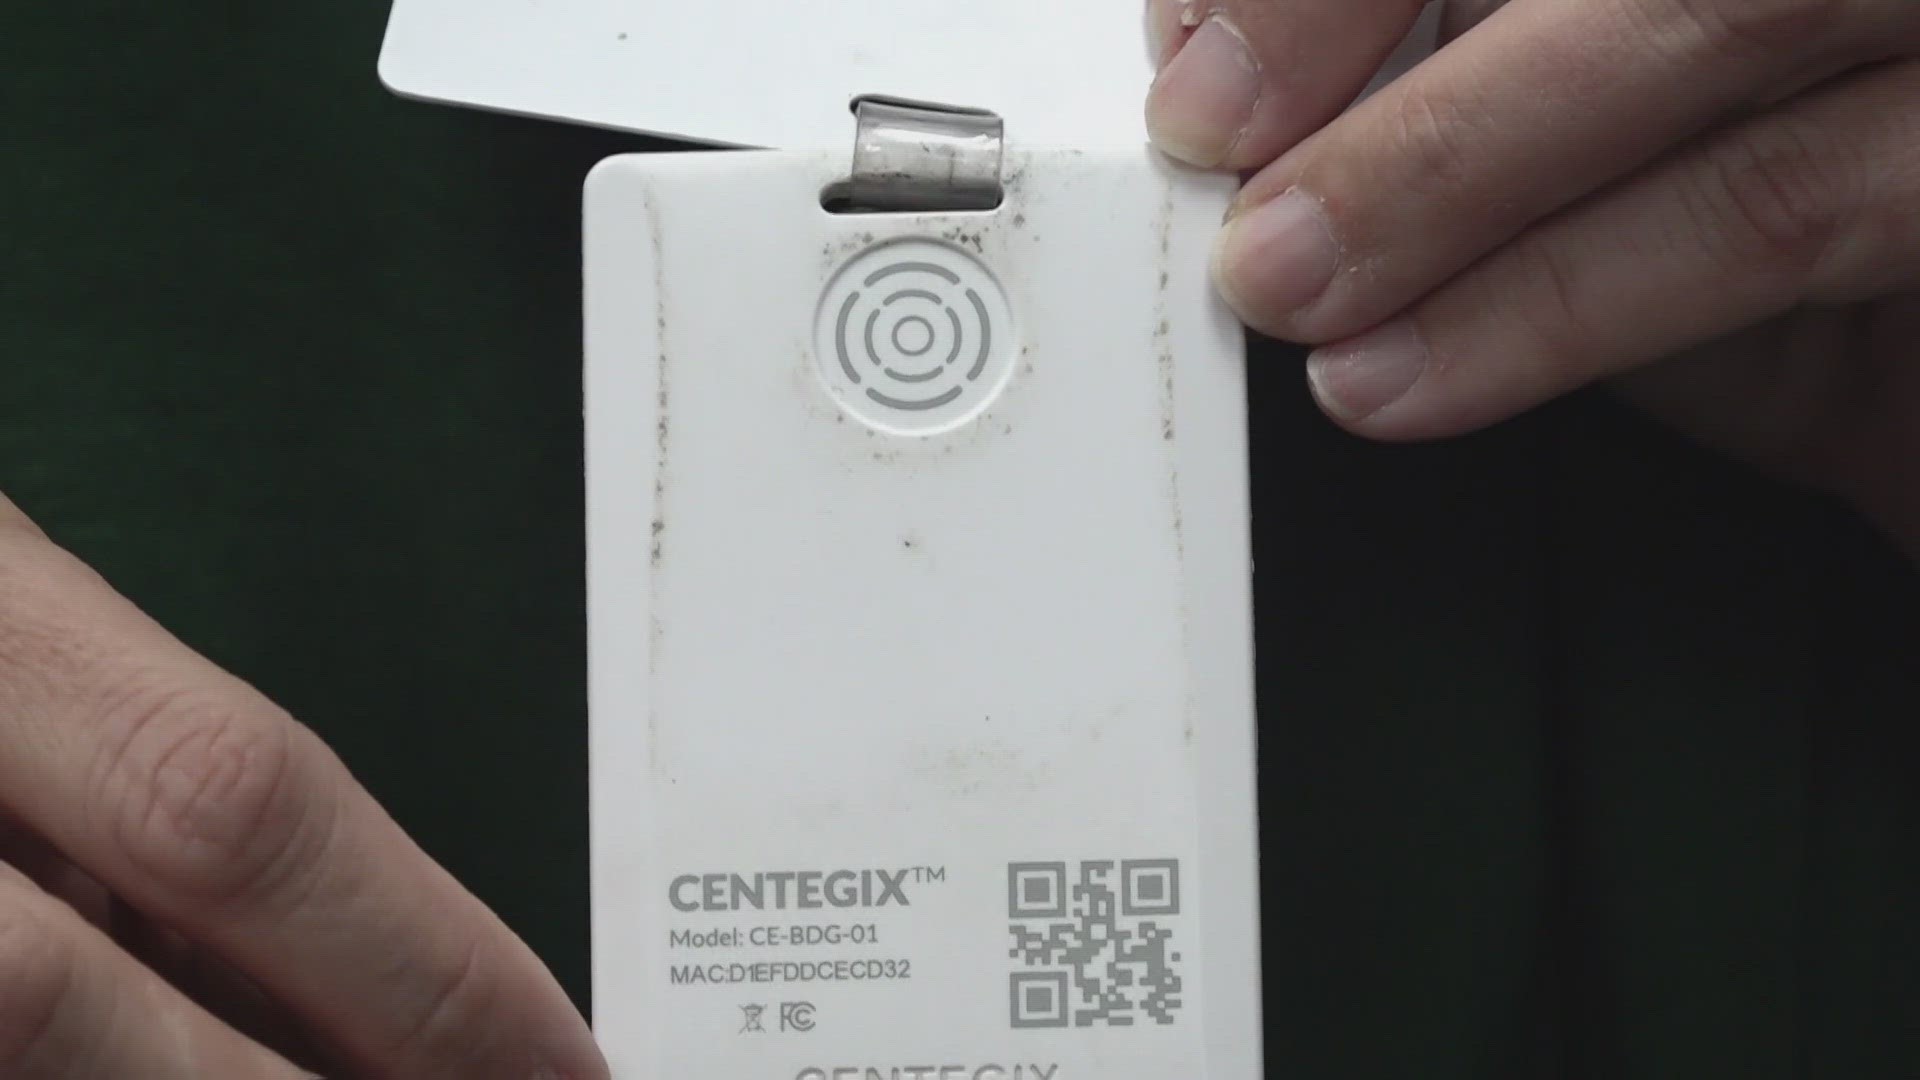 At Clinton Elementary School, staff can use a school-wide alert system through a "Centegix badge."